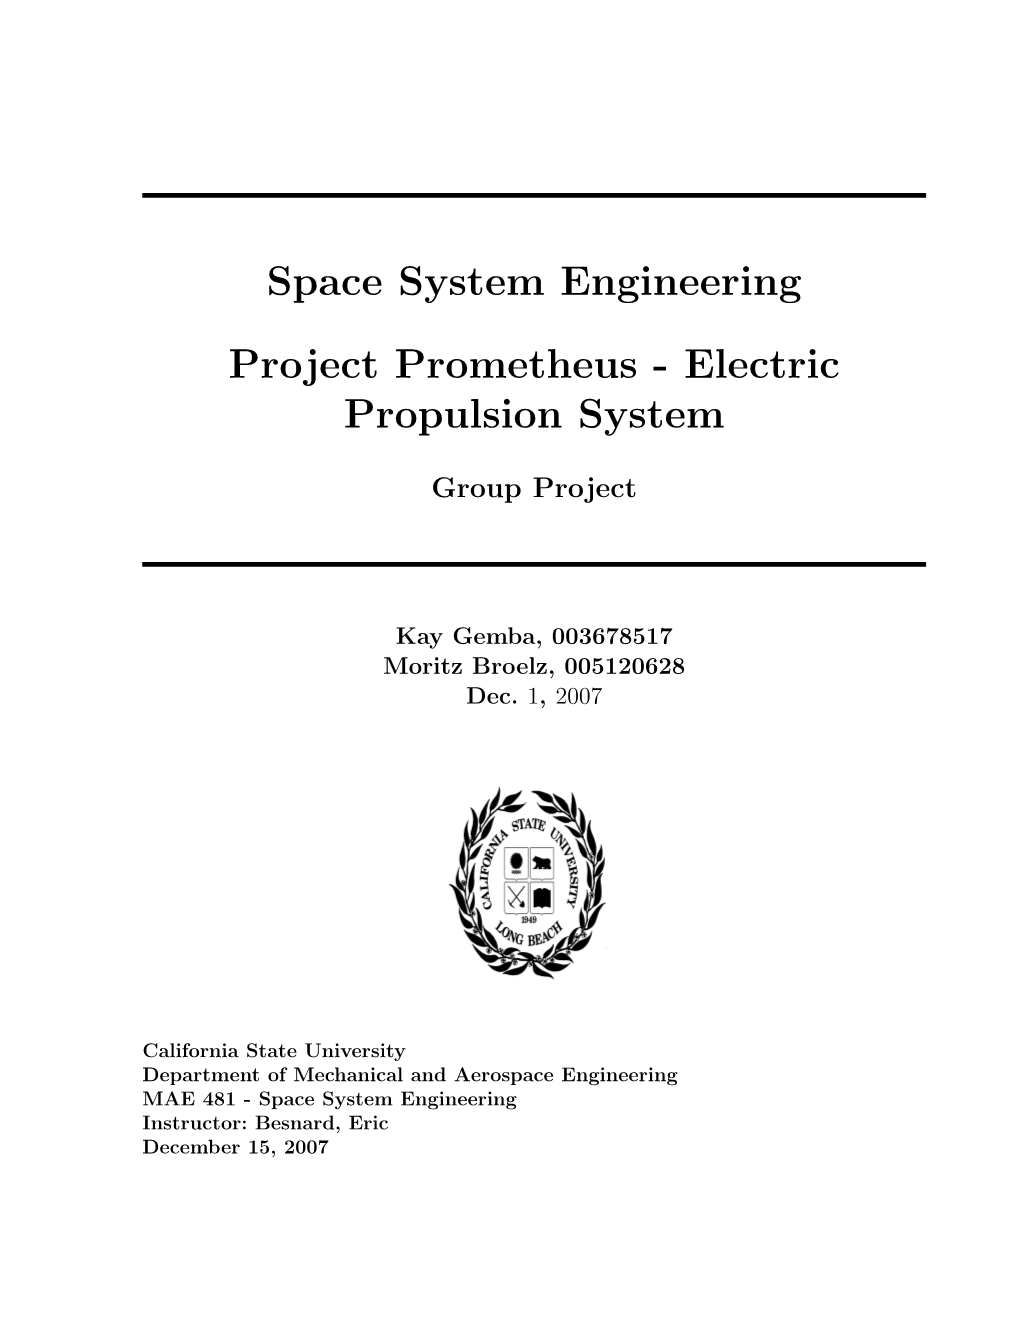 Project Prometheus Electric Propulsion System